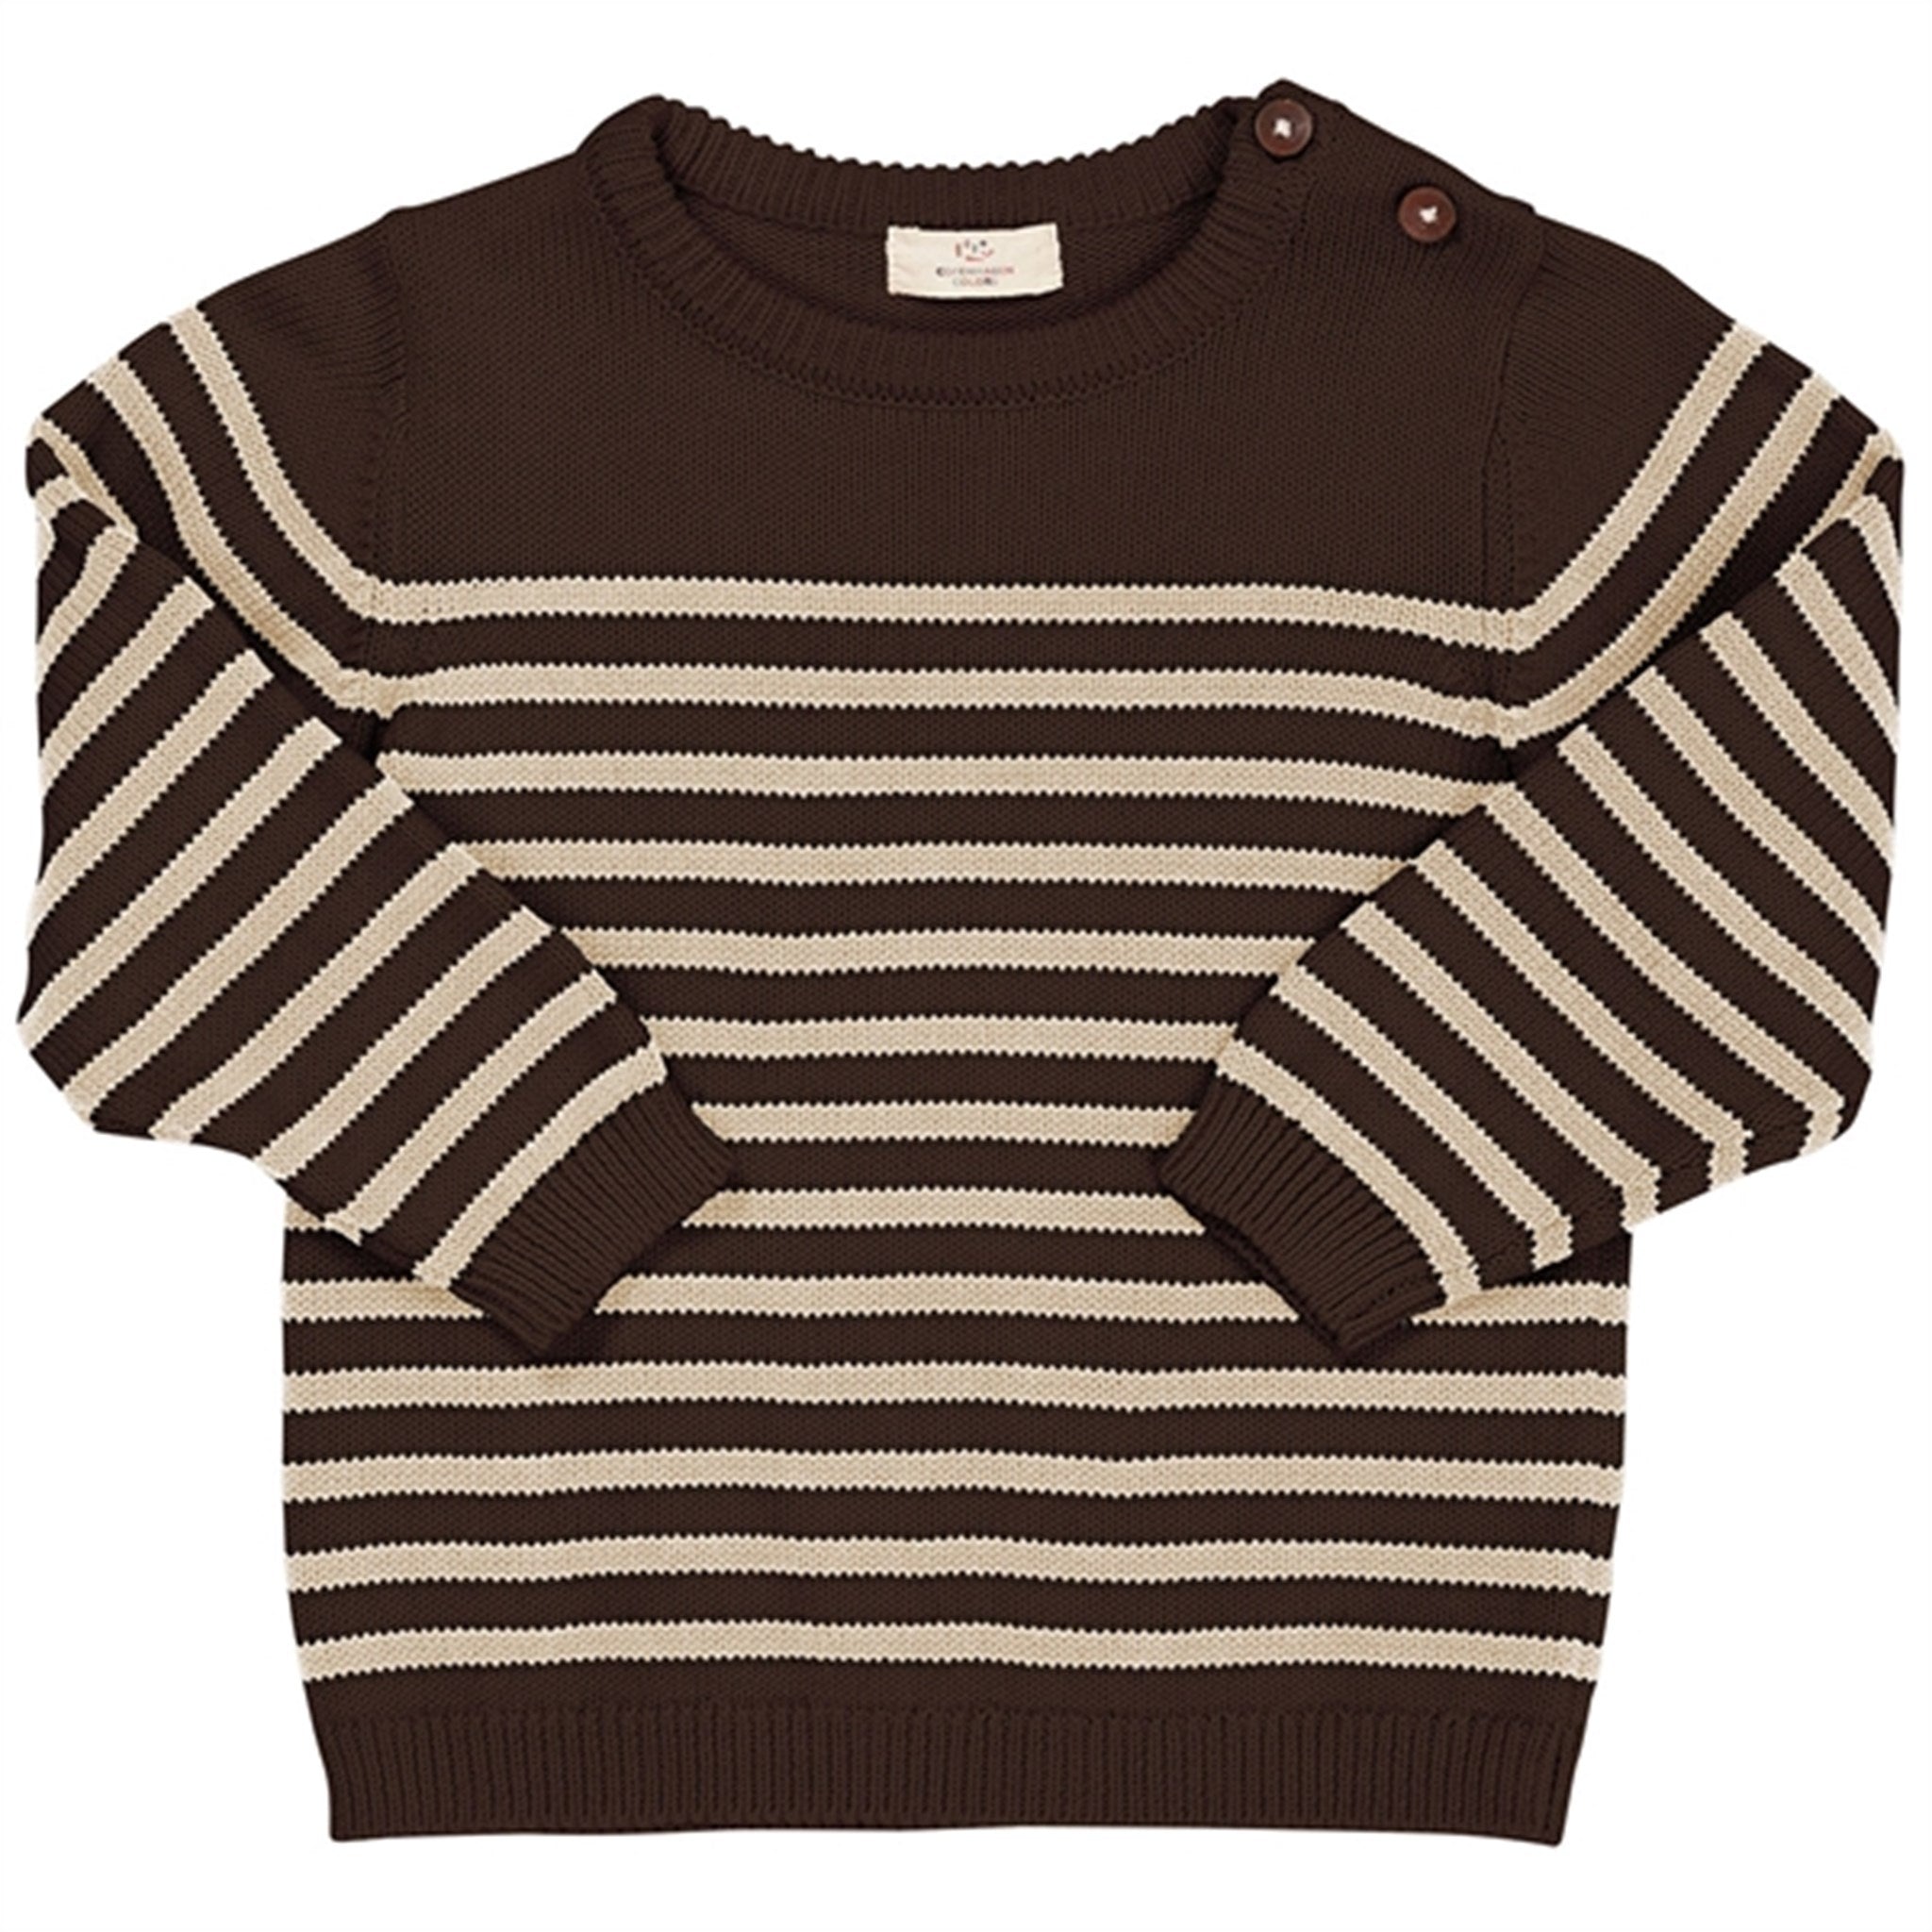 Copenhagen Colors Dk Brown Cream Combi Strikket Striped Sailor Sweater